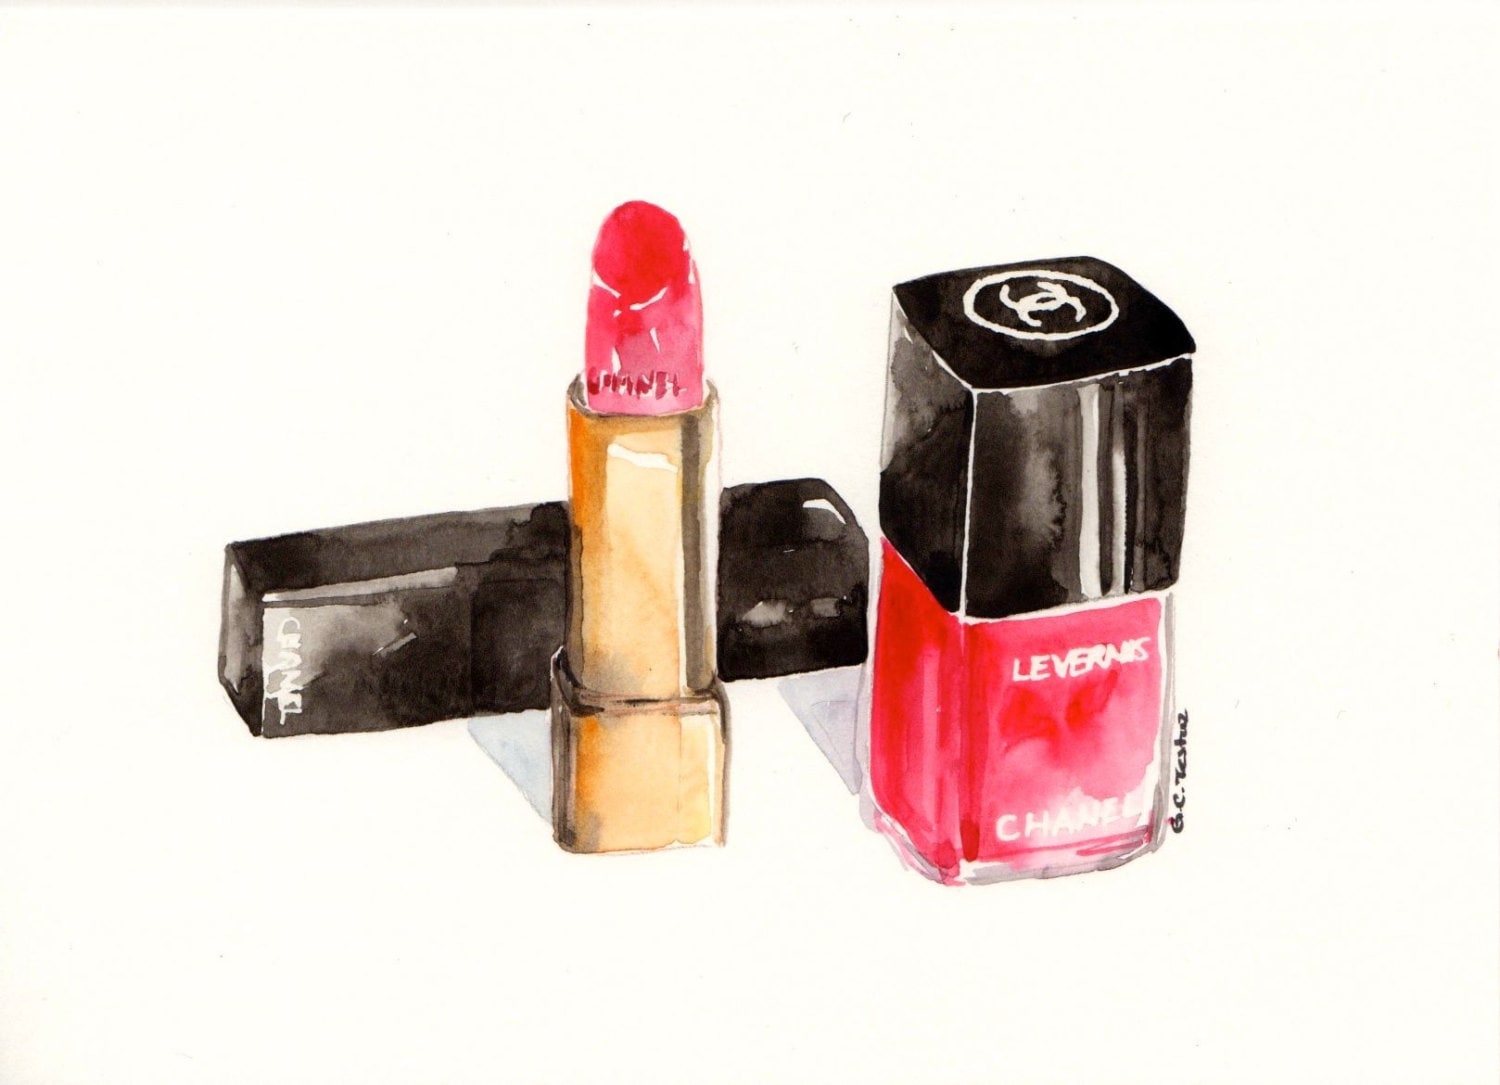 Chanel makeup drawing